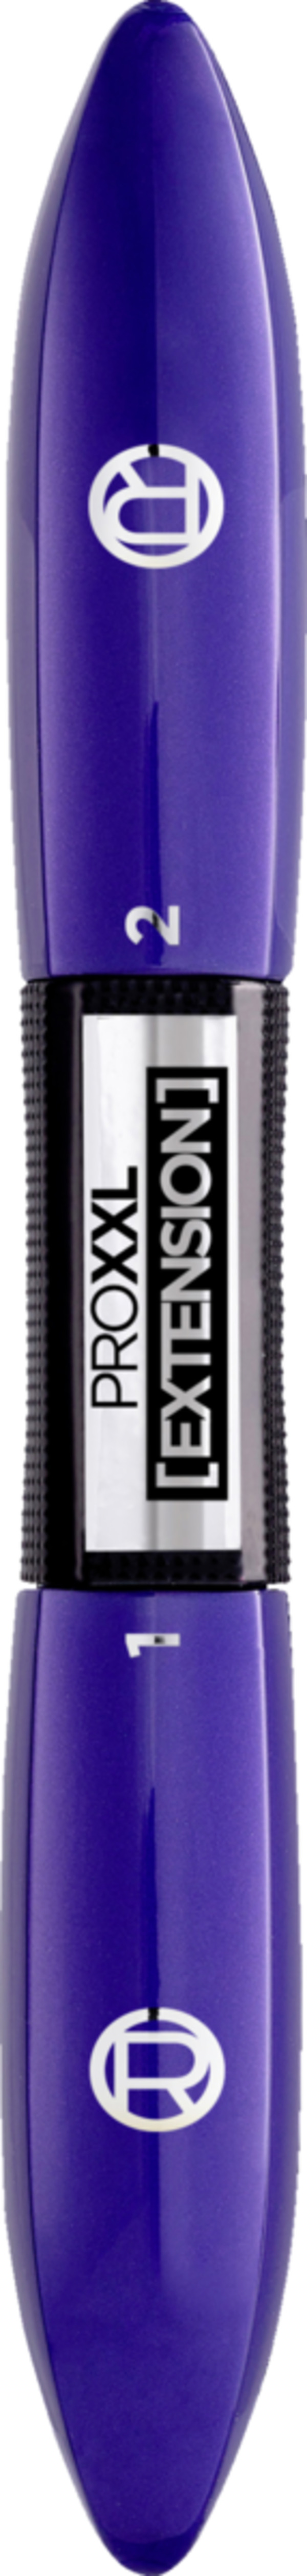 Bild 1 von L’Oréal Paris ProXXL Extension Mascara schwarz